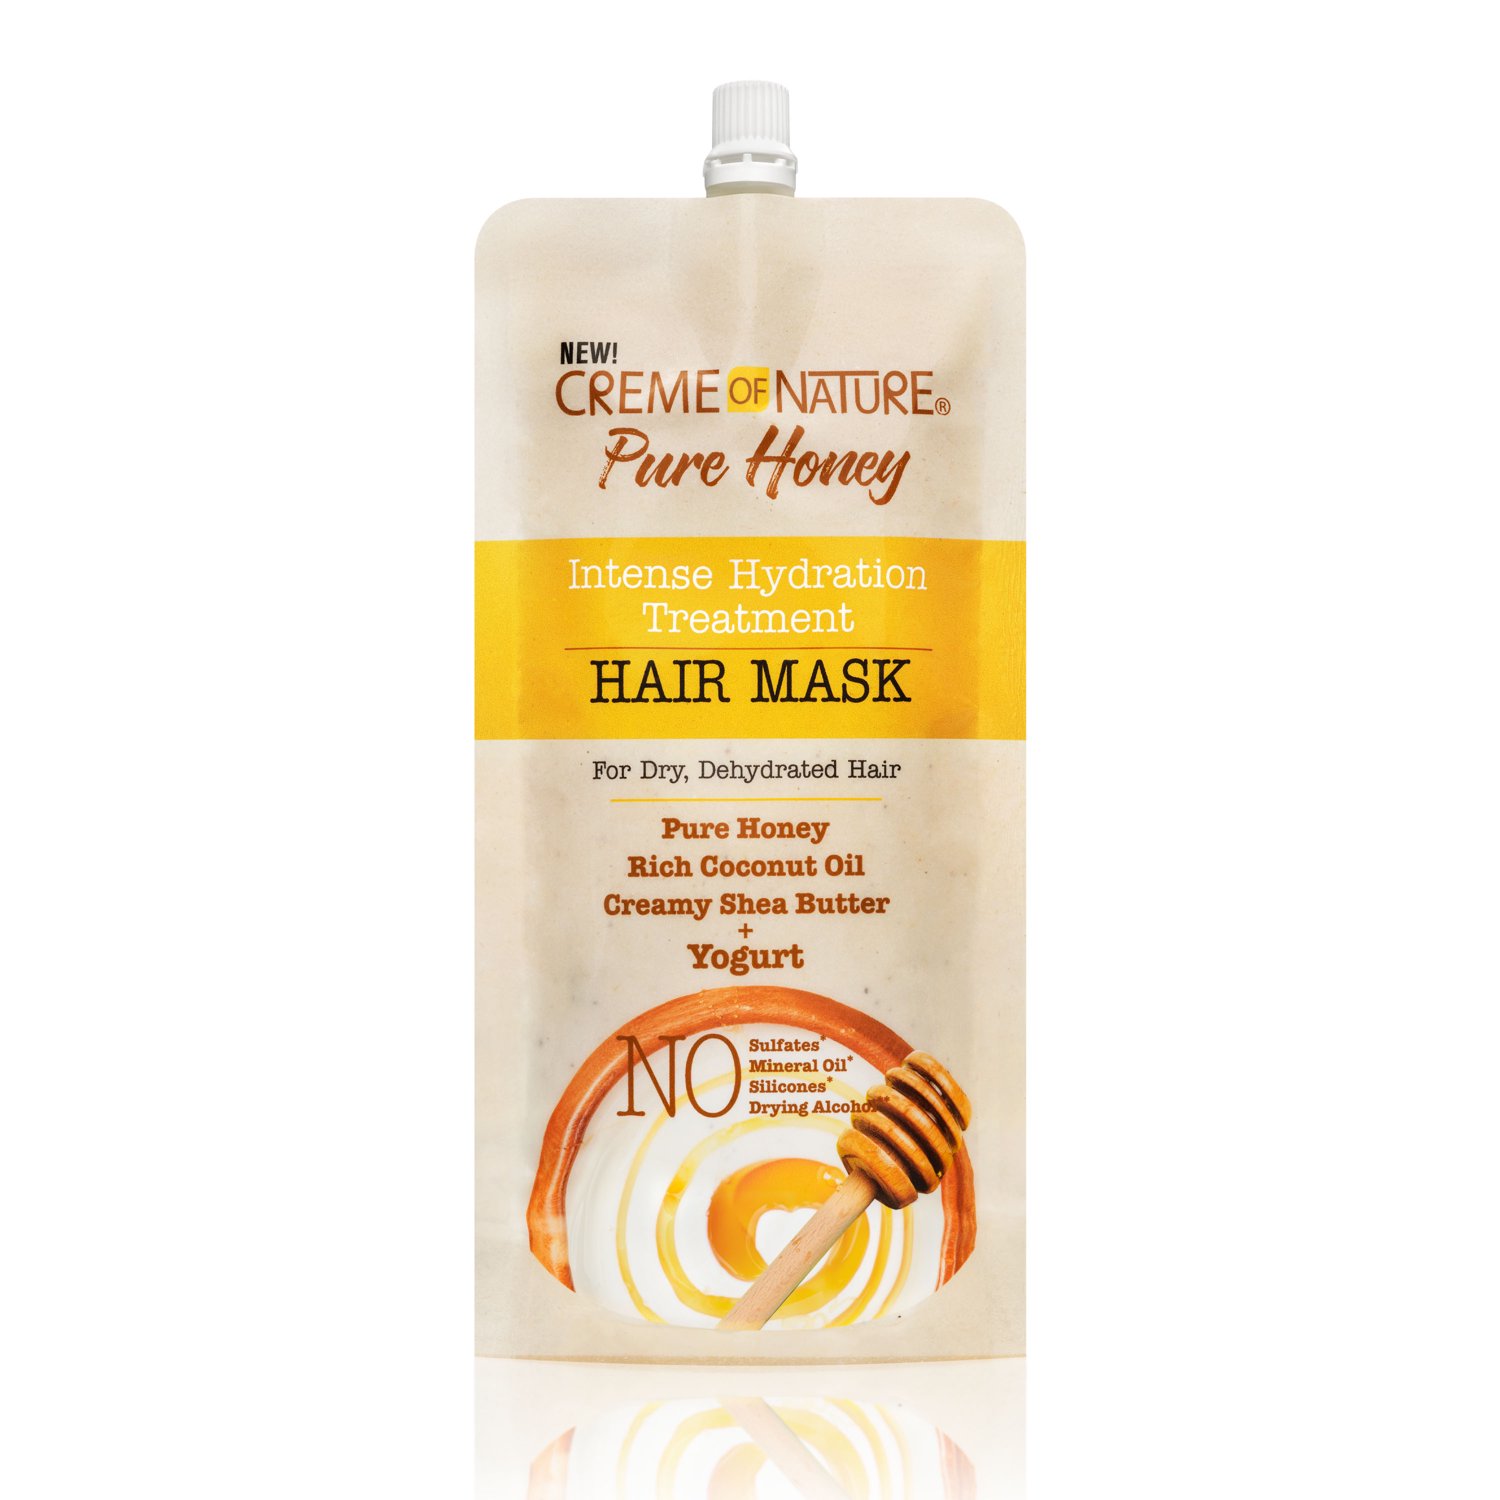 Creme of Nature Pure Honey Intense Hydration Treatment Hair Mask, 3.4 oz - image 1 of 8